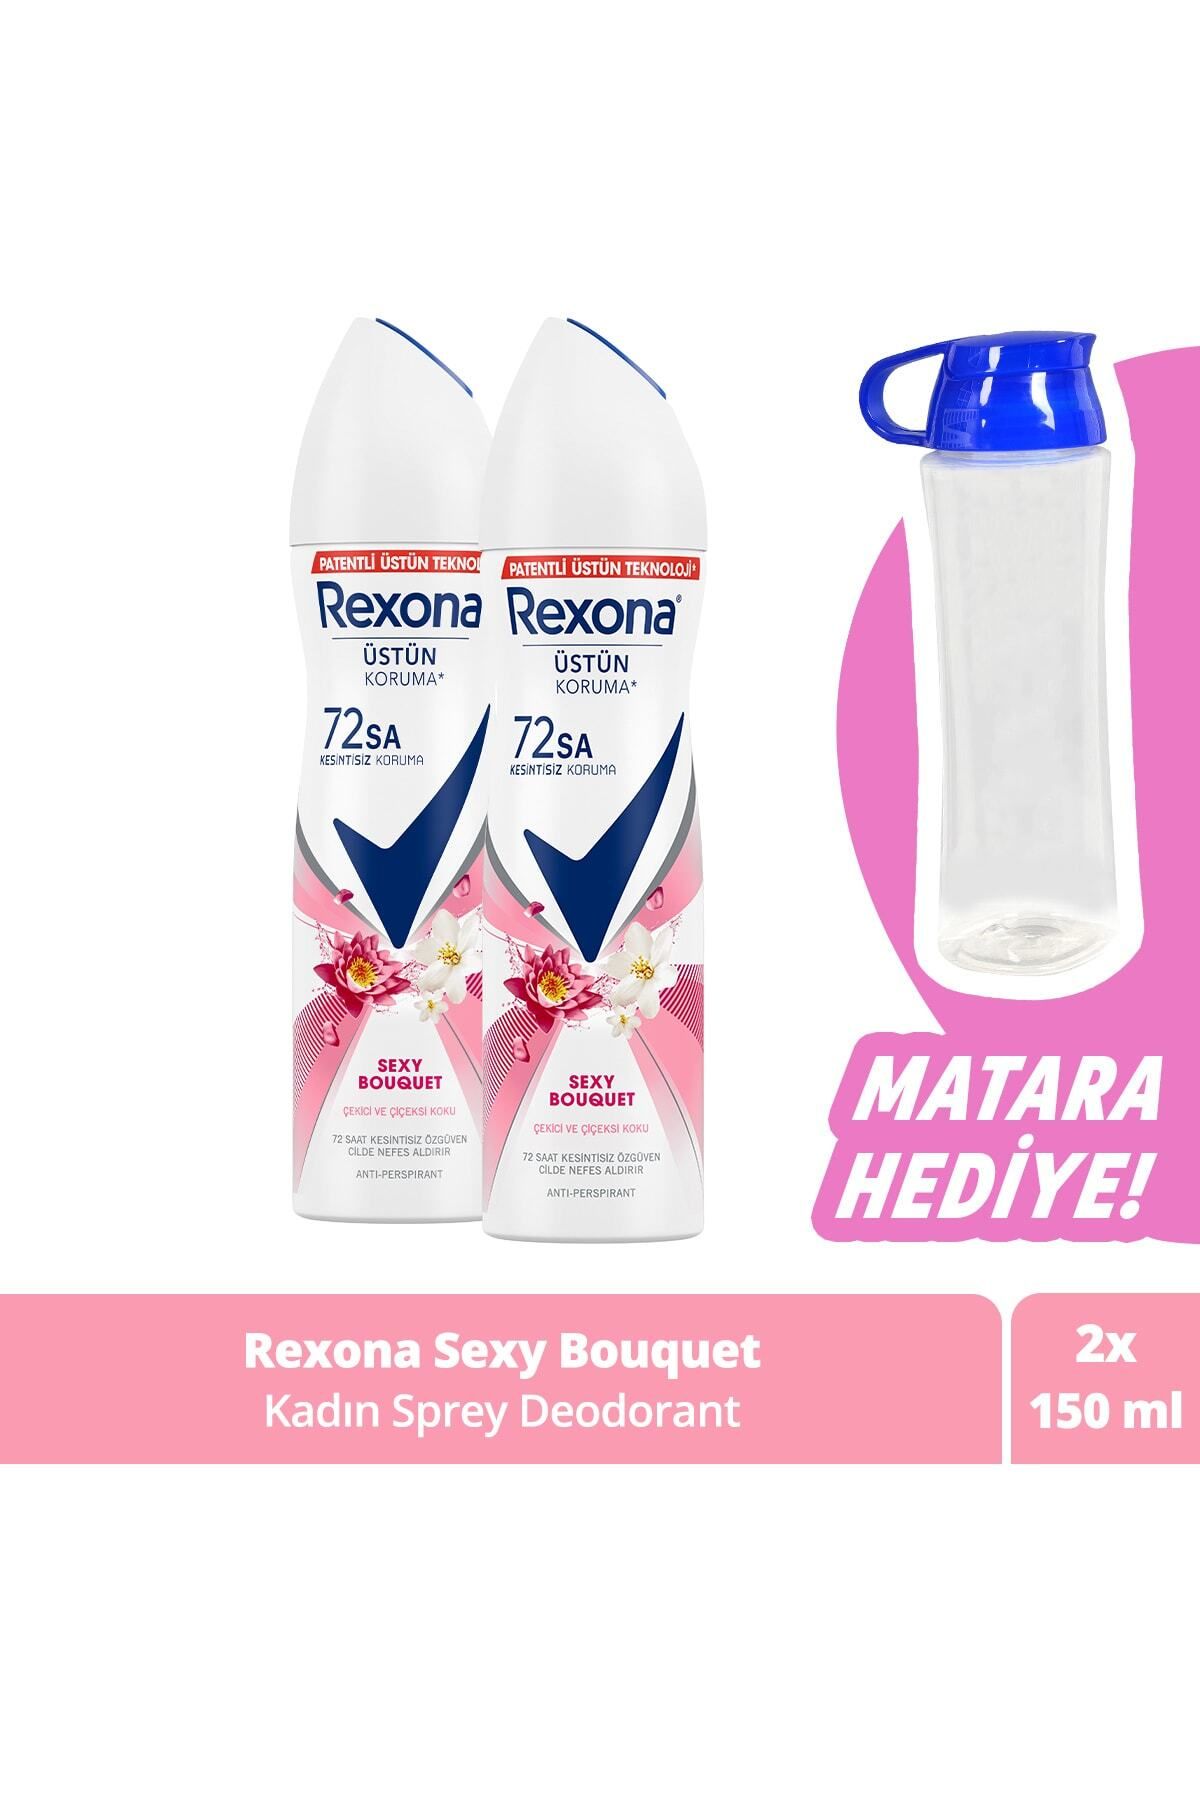 Rexona Kadın Sprey Deodorant Sexy Bouquet Ter Kokusuna Karşı Koruma 150 ml x 2 + Matara